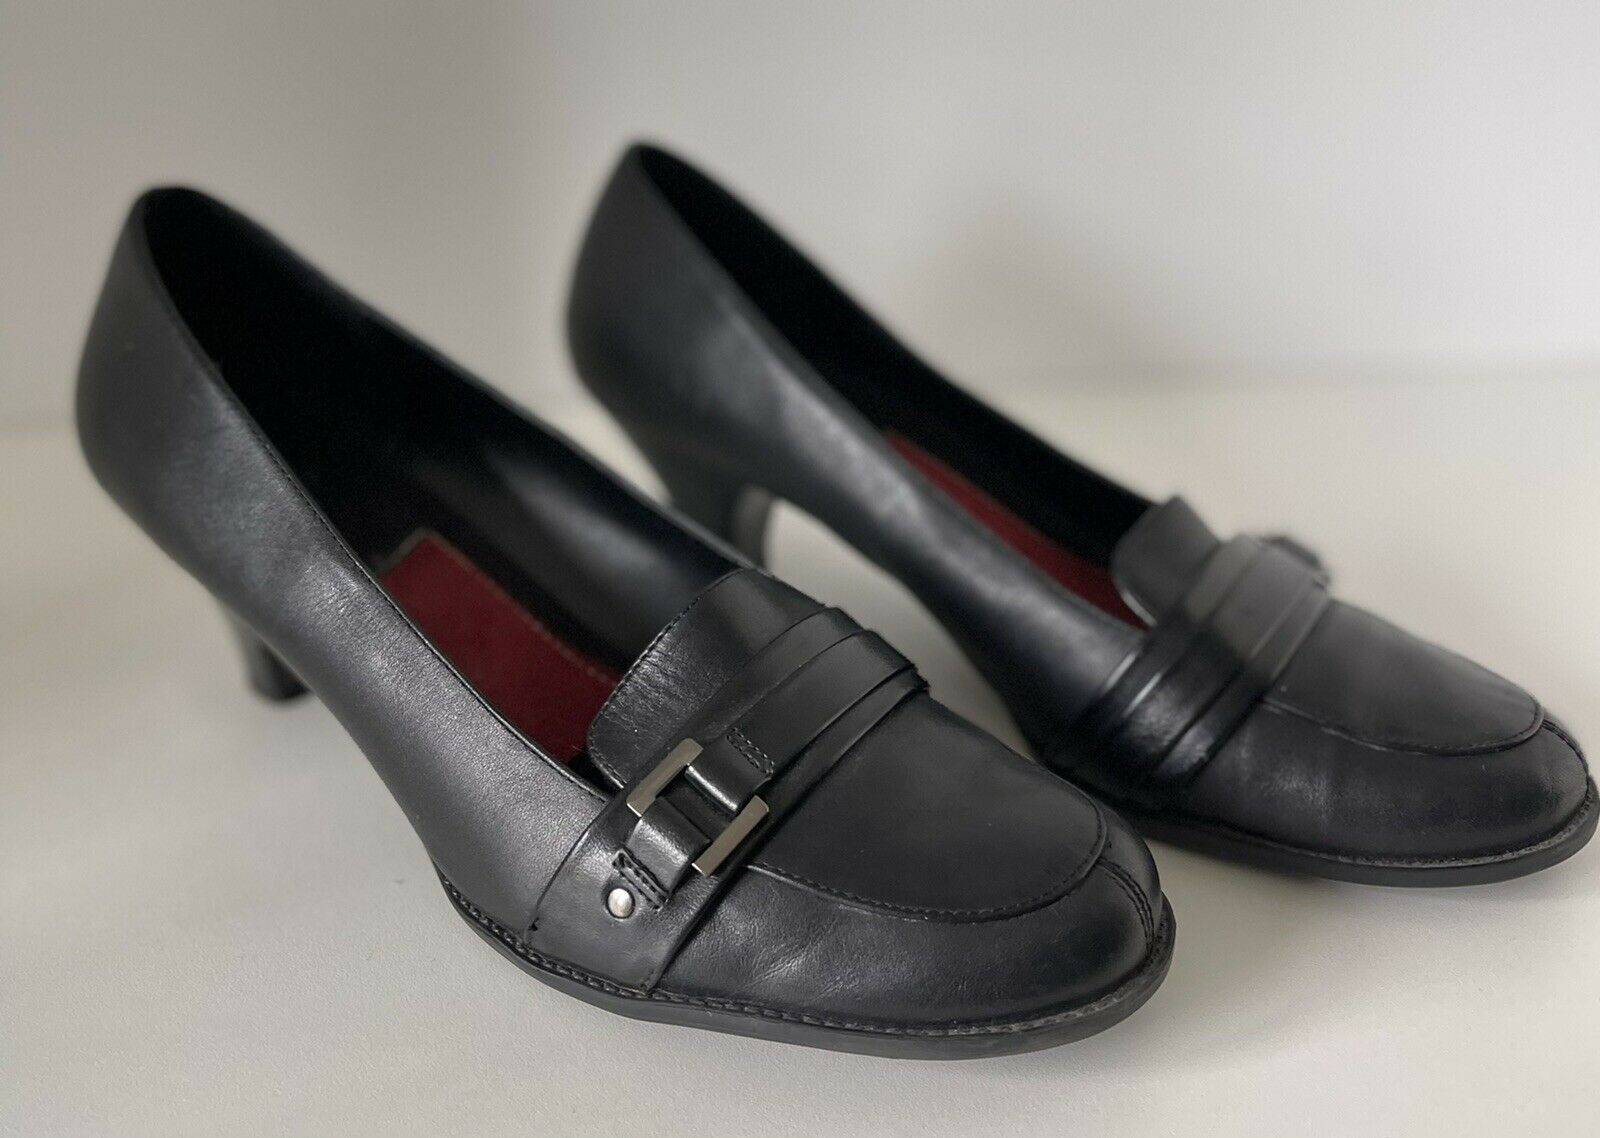 AEROSOLES Women's Barcelona Black Leather Low Heel Shoes Size 8.5 US